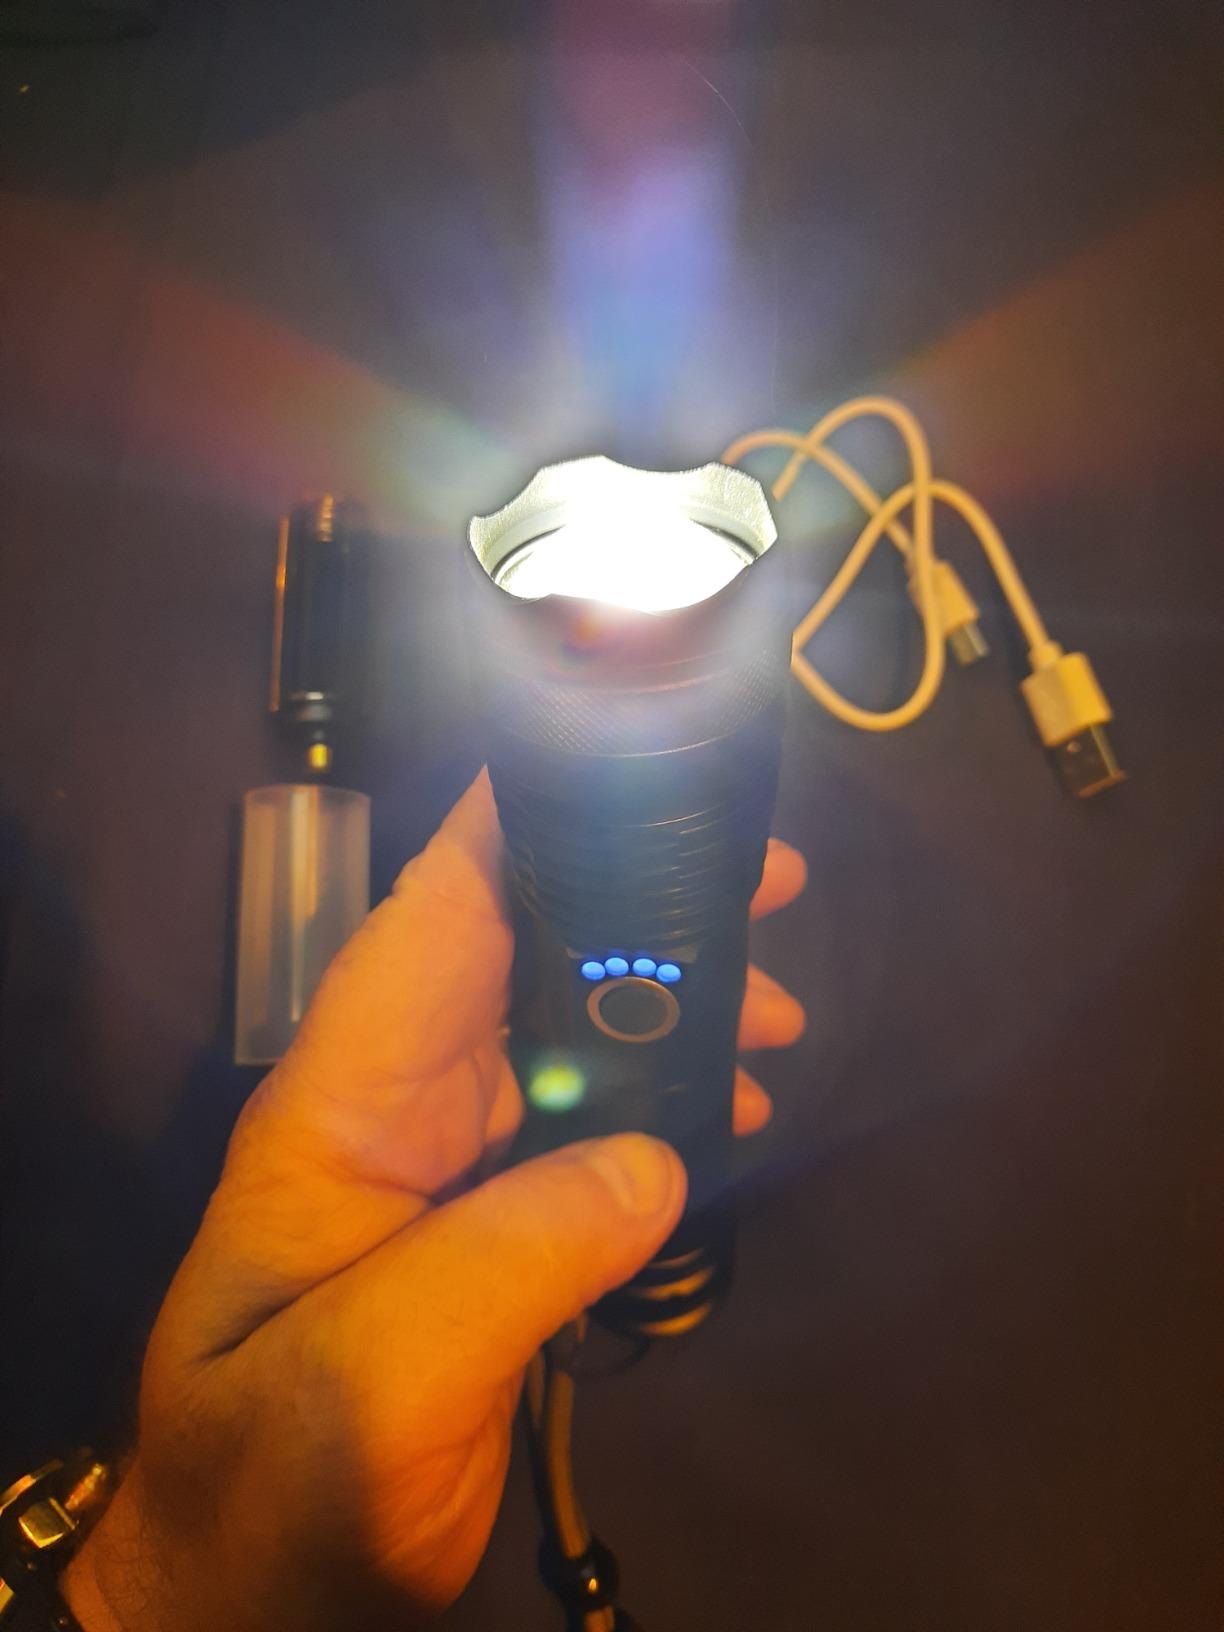 150000 Lumens XHP70.2 Most Powerful Usb Led Flashlight photo review